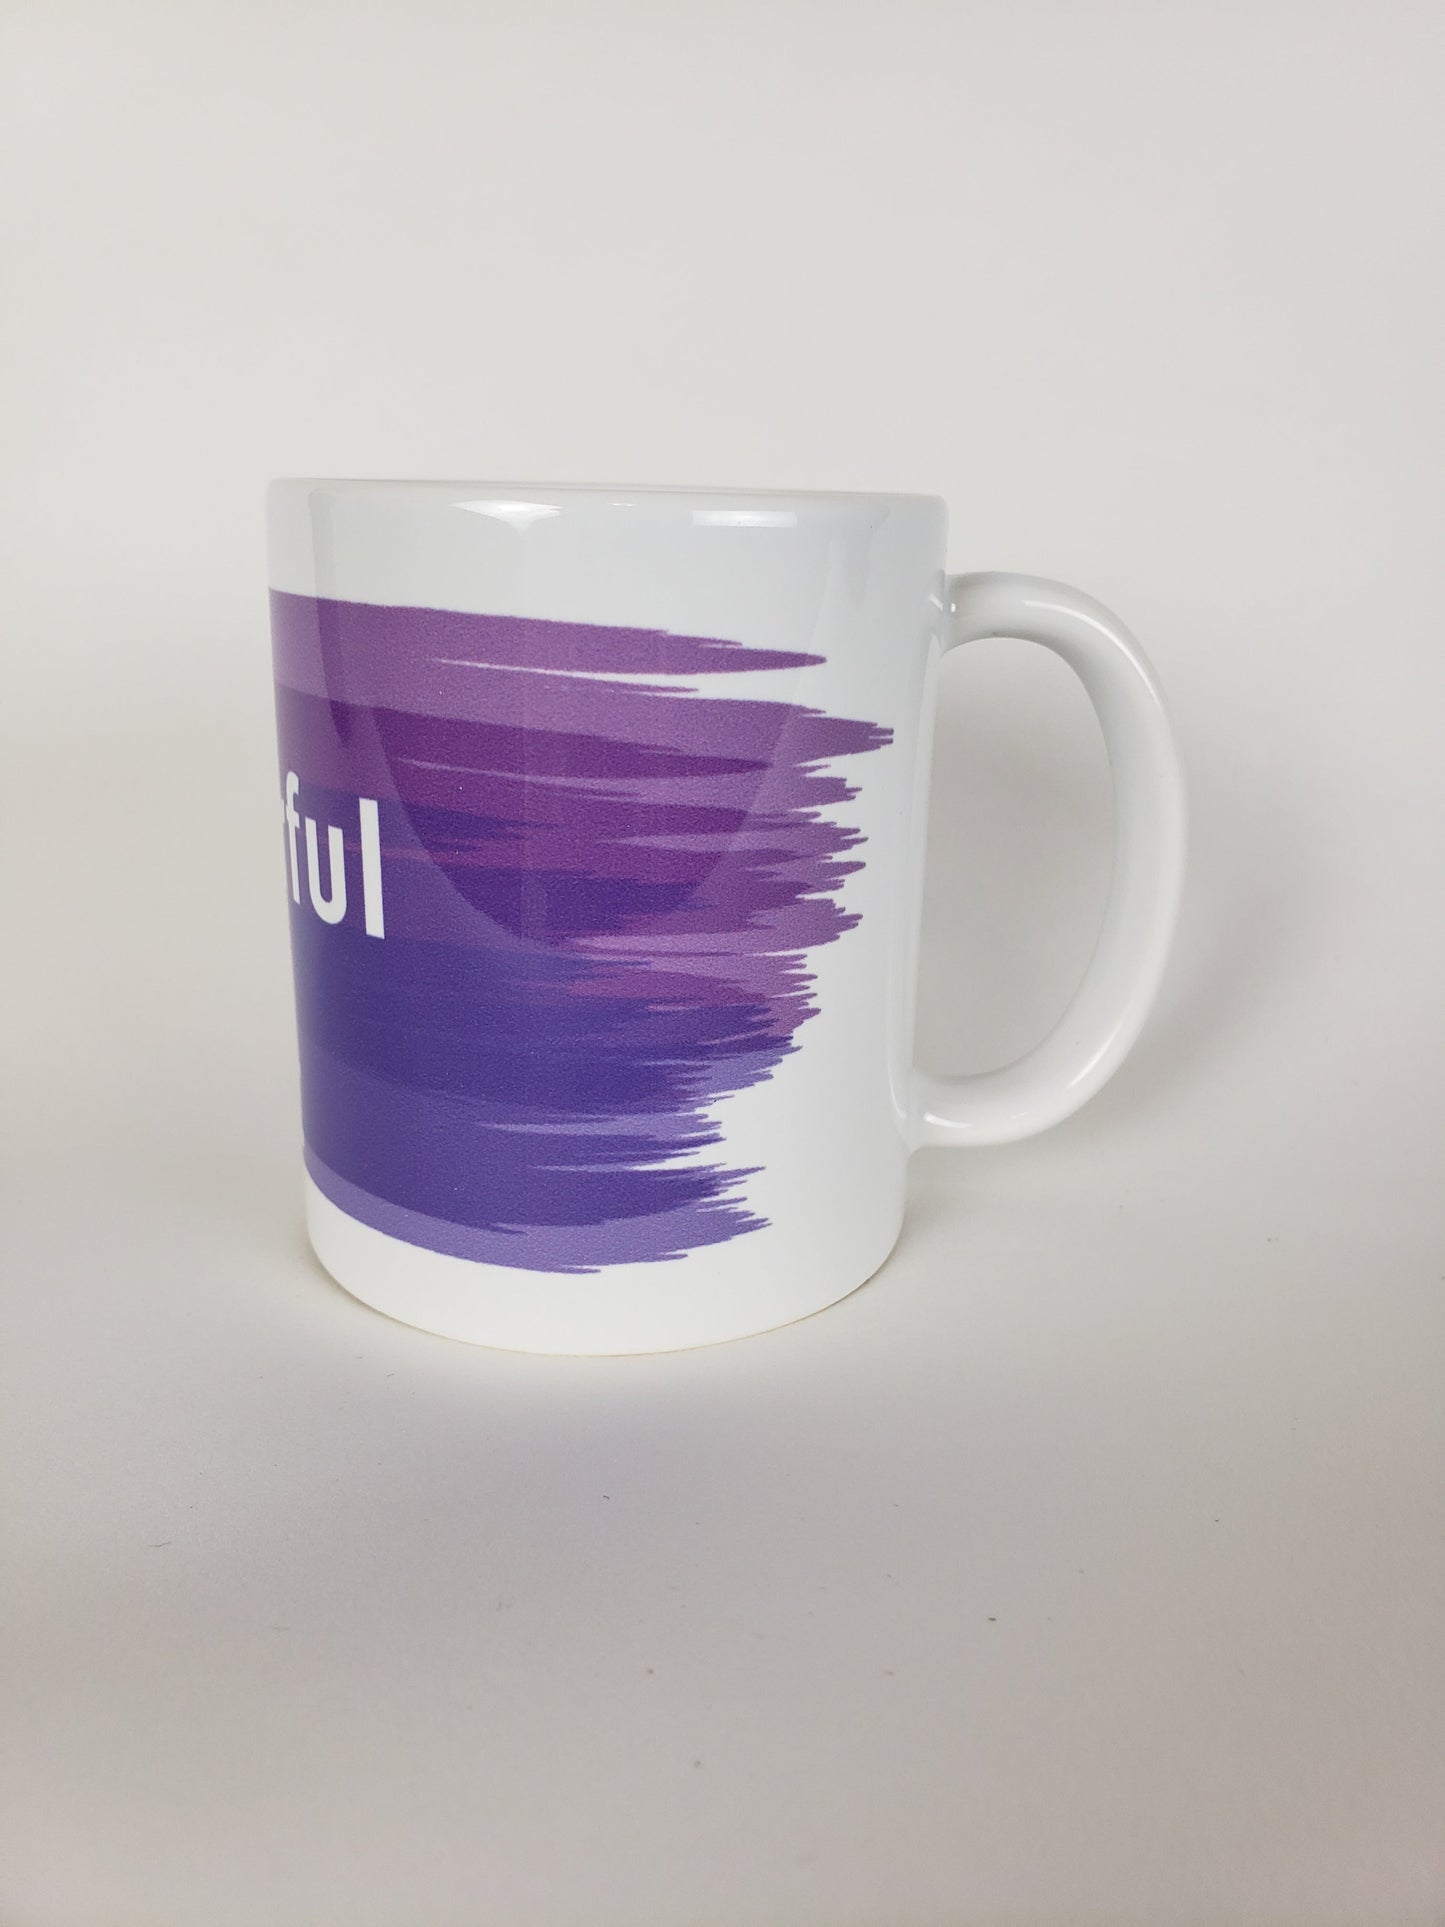 Ever Powerful In Christ Coffee Mug – Purple and Yellow